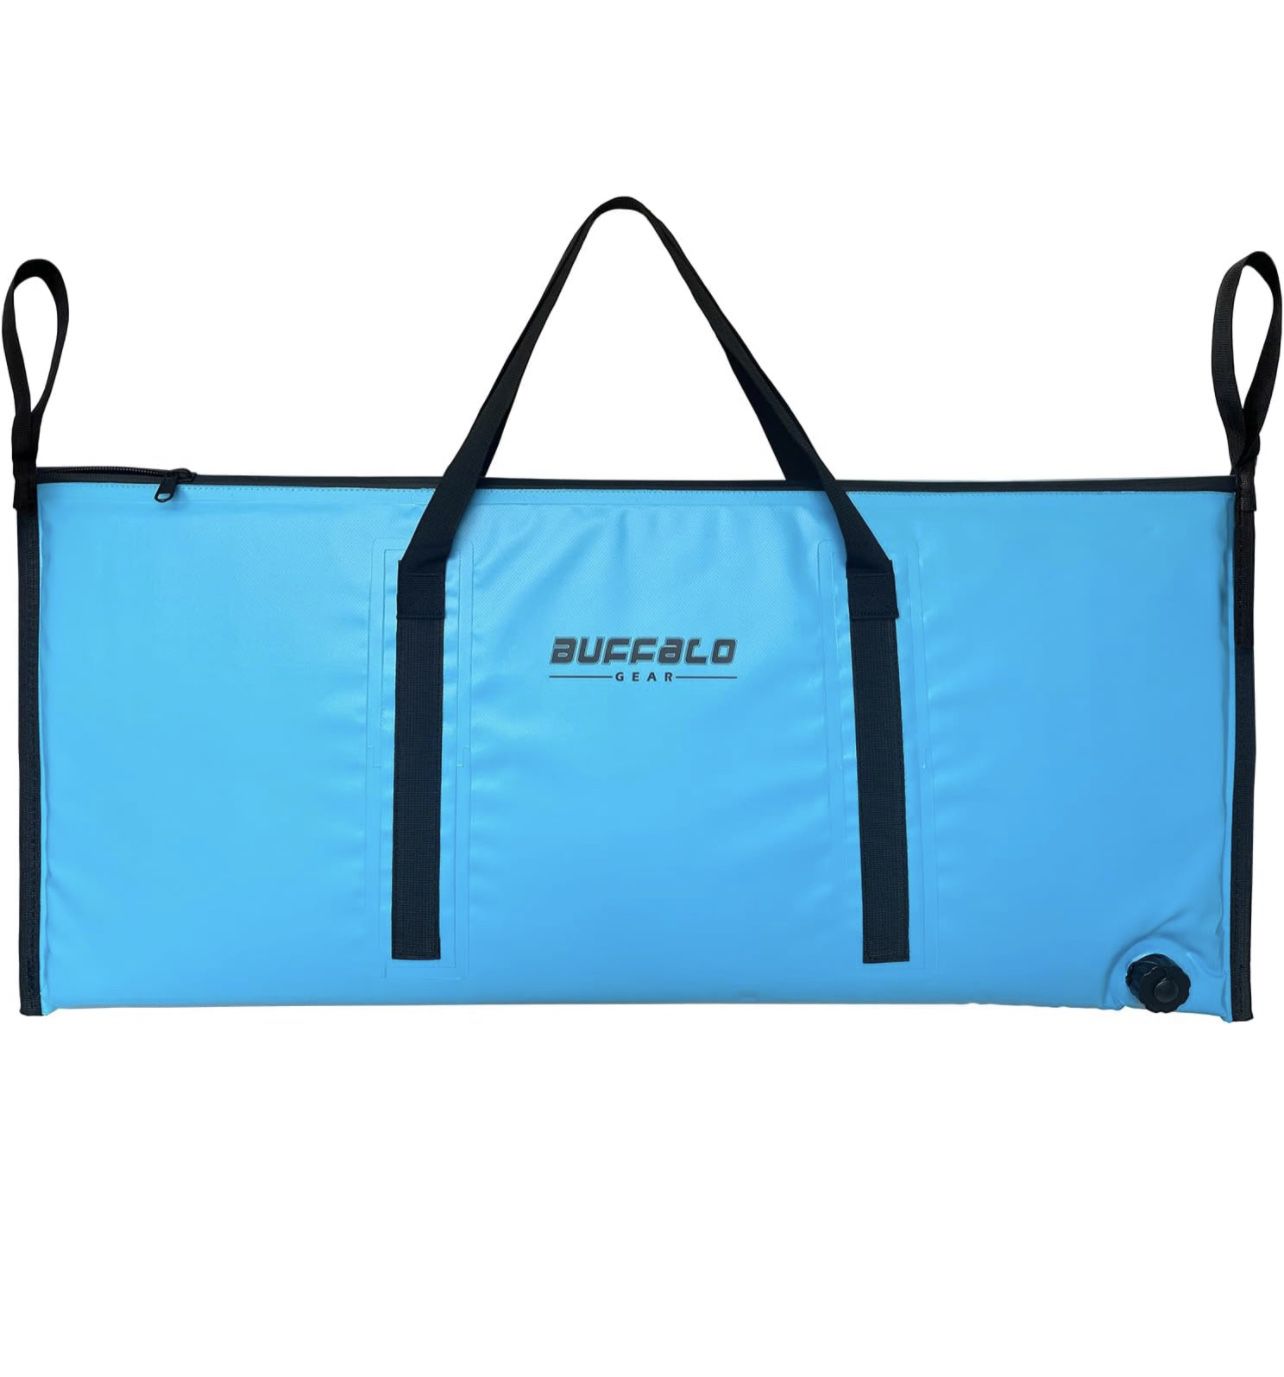 Buffalo Gear Insulated Fish Cooler Bag 40x18in 48x18in Leakproof Fish Kill Bag Portable Waterproof Fish Bag